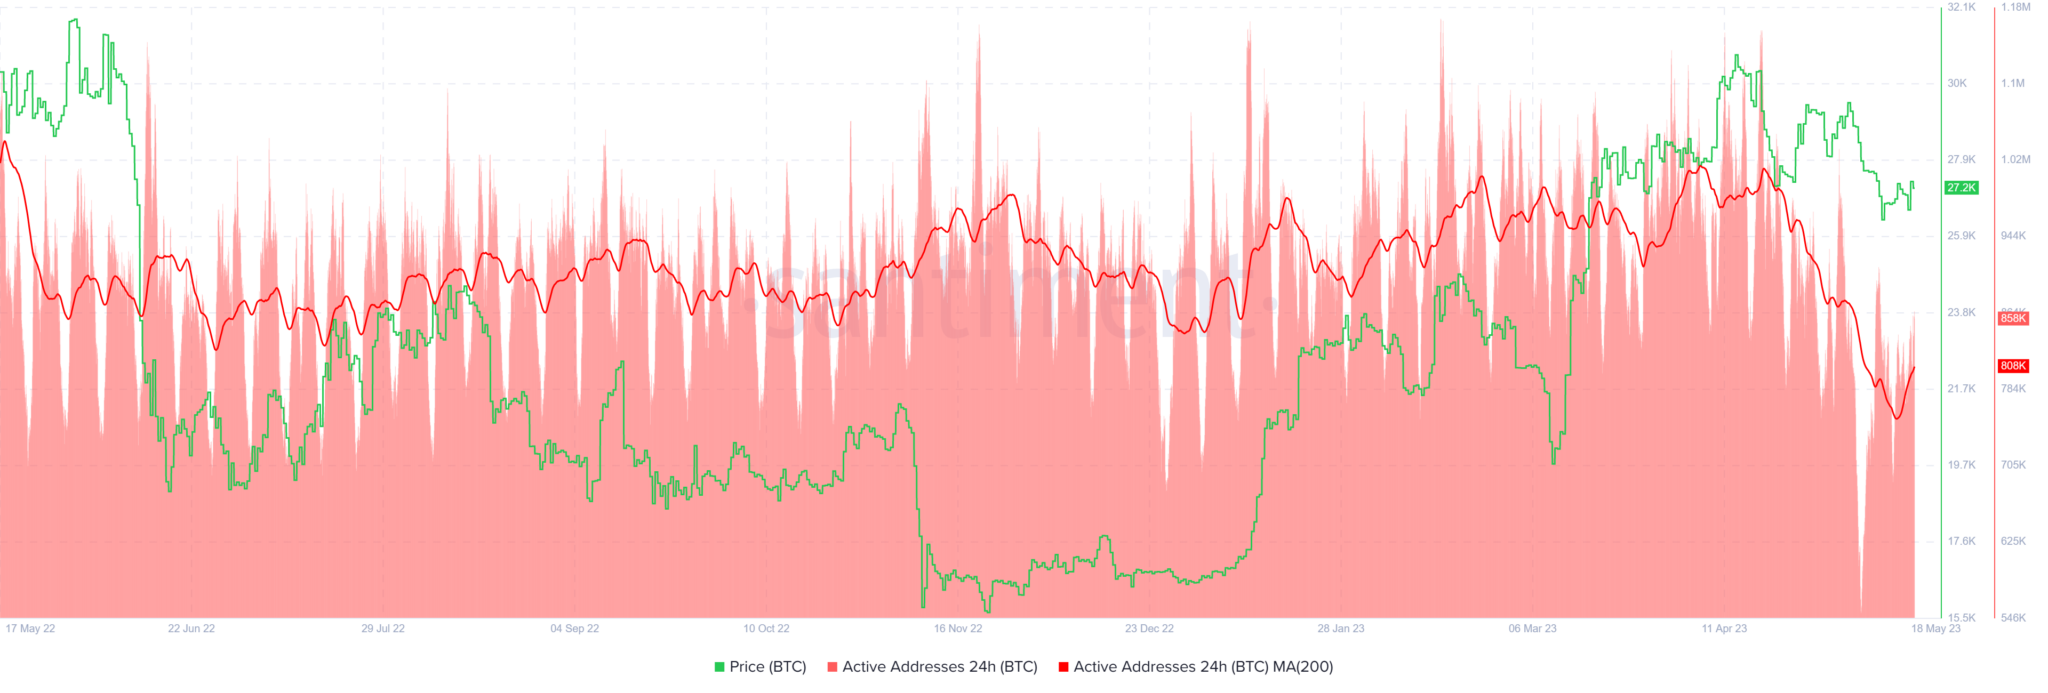 Sanbase insight on Bitcoin's network activity